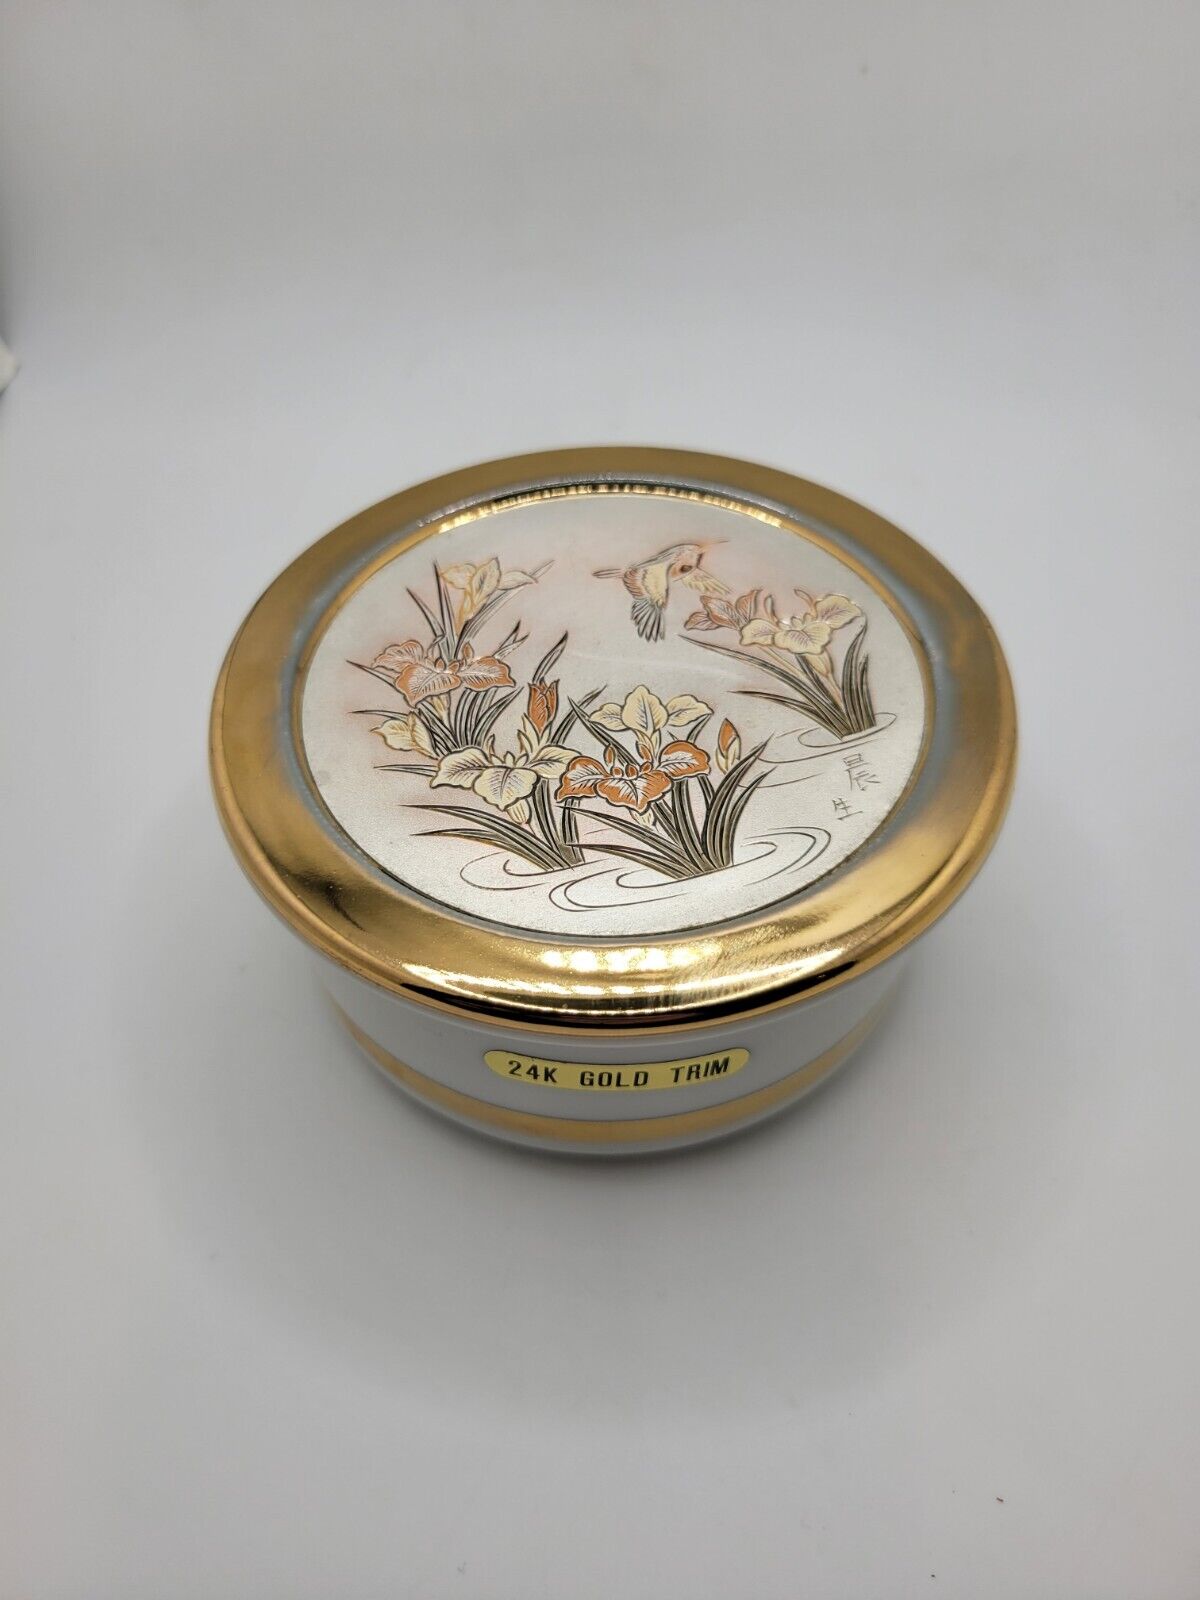 The Art of Chokin 24 K Gold Edge Trim Gilded Silver And Gold Trinket Box-Japan